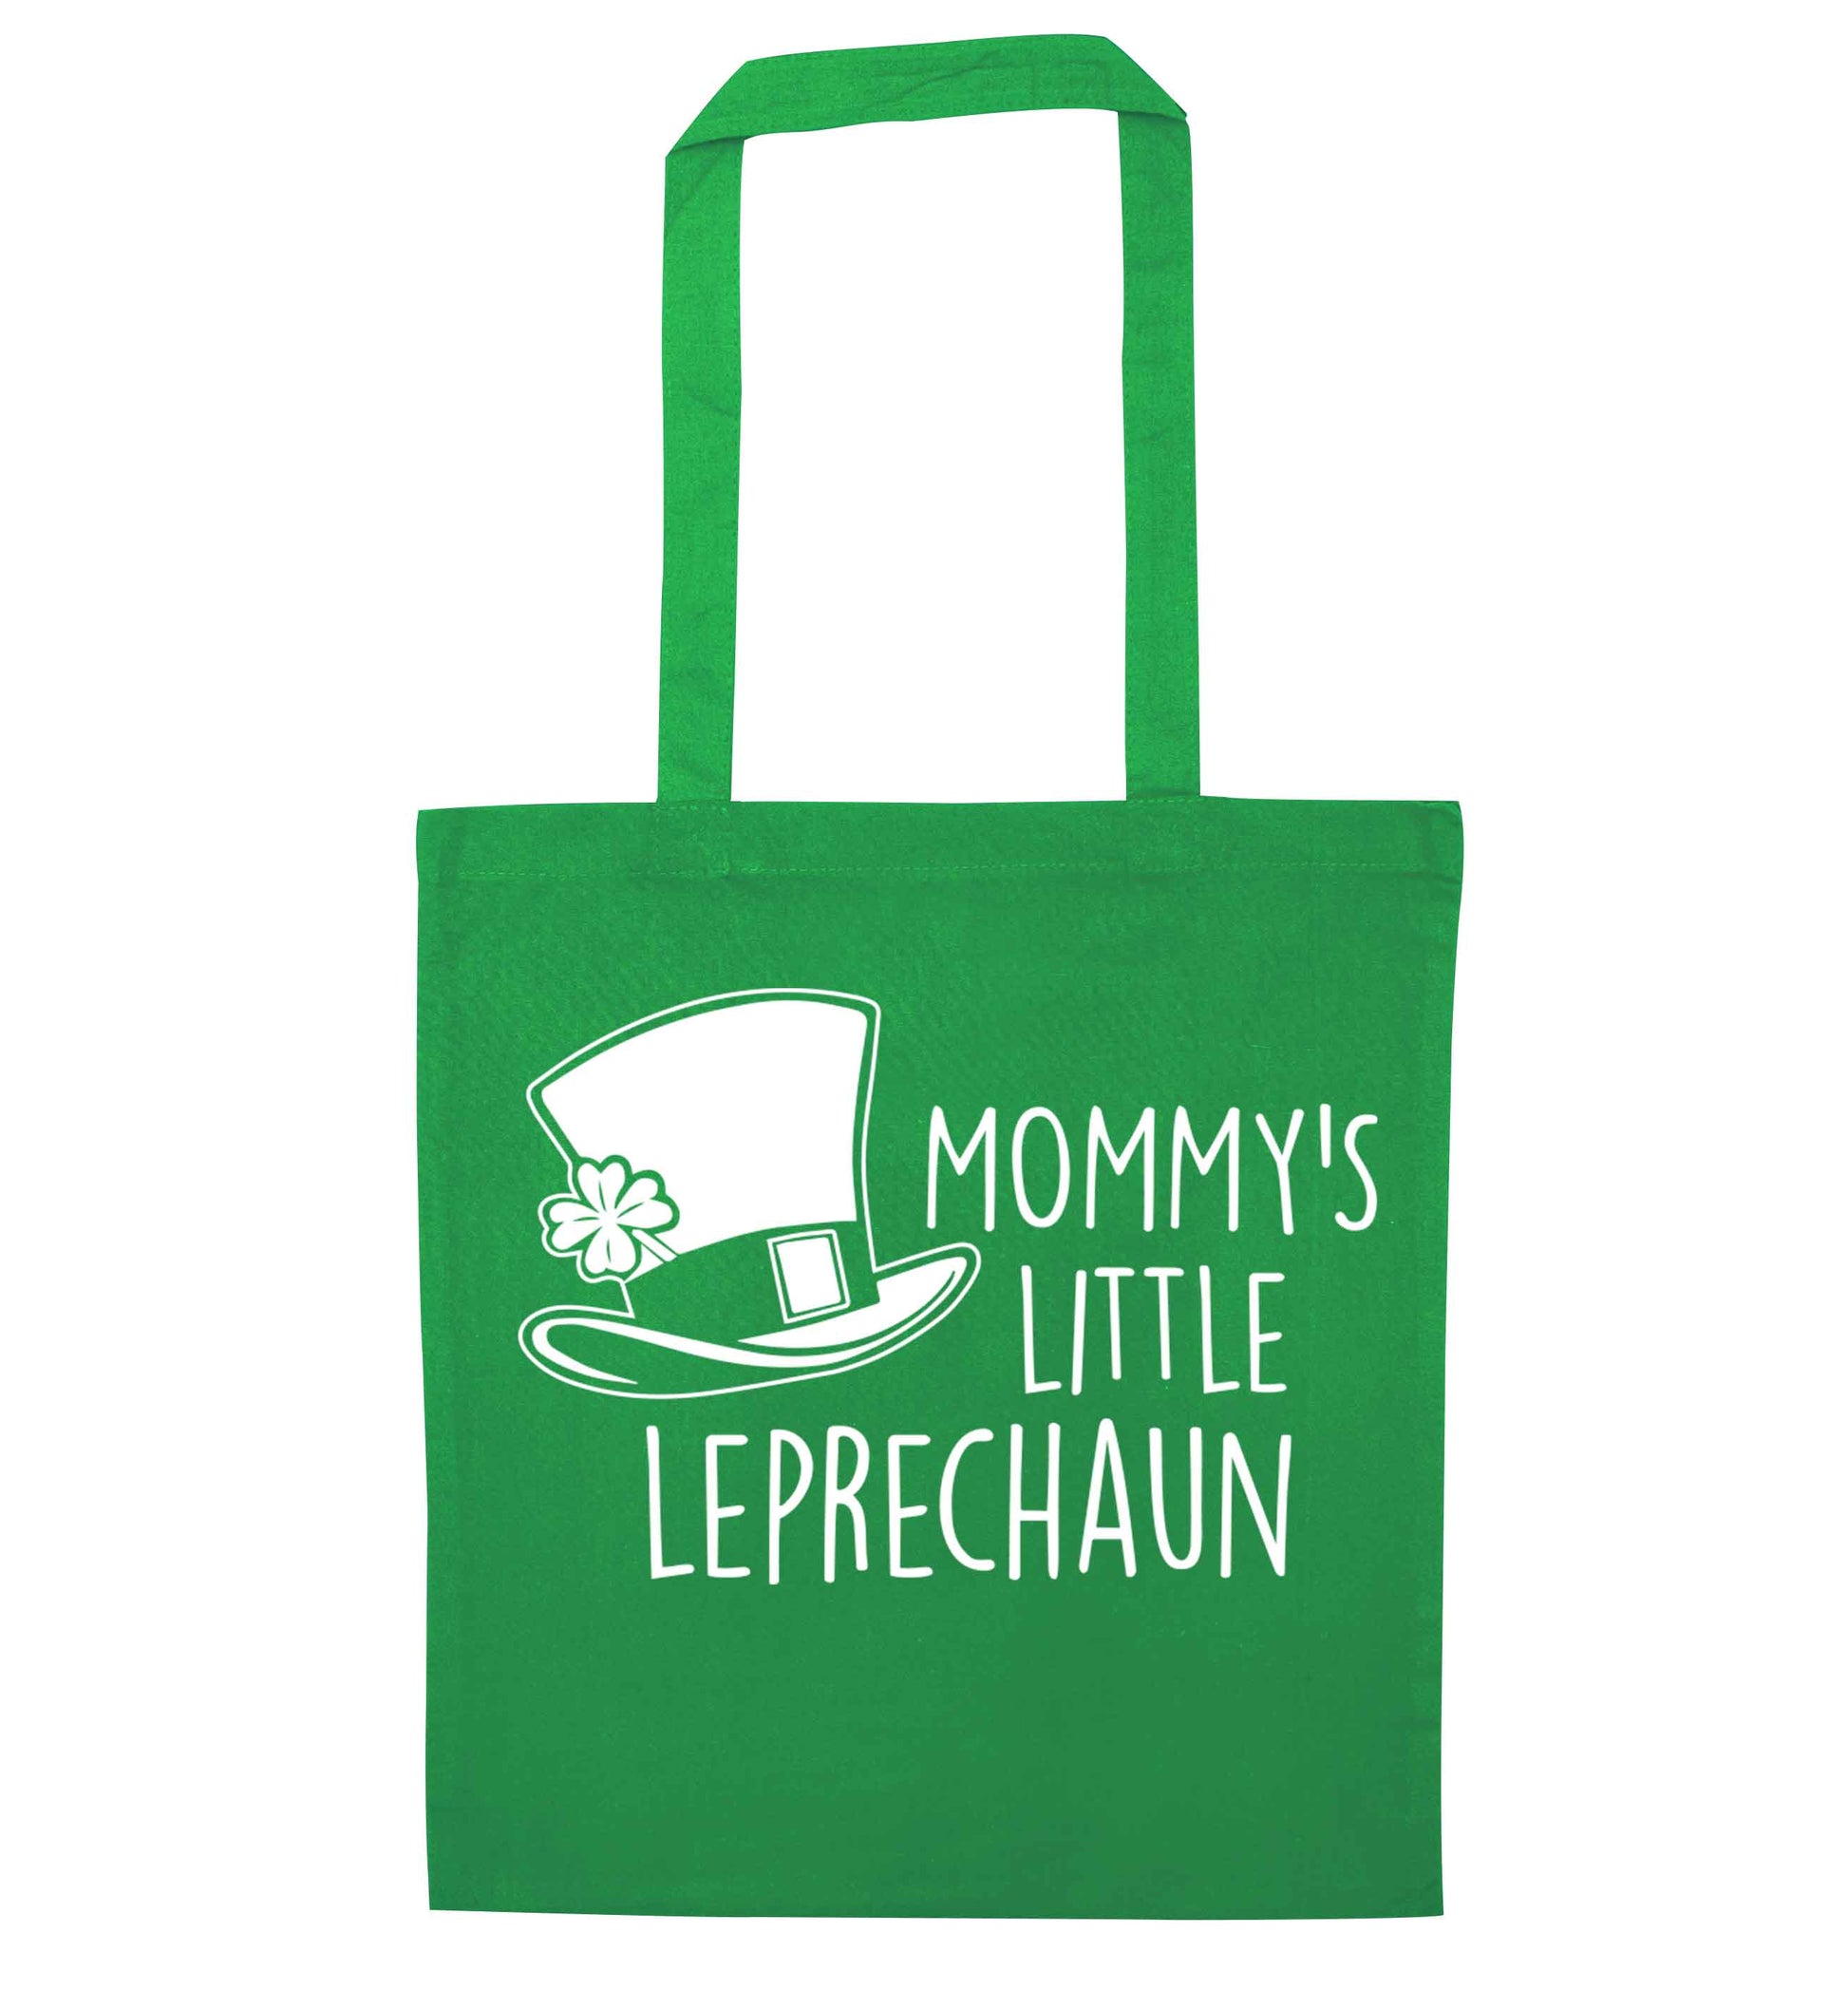 Mommy's little leprechaun green tote bag